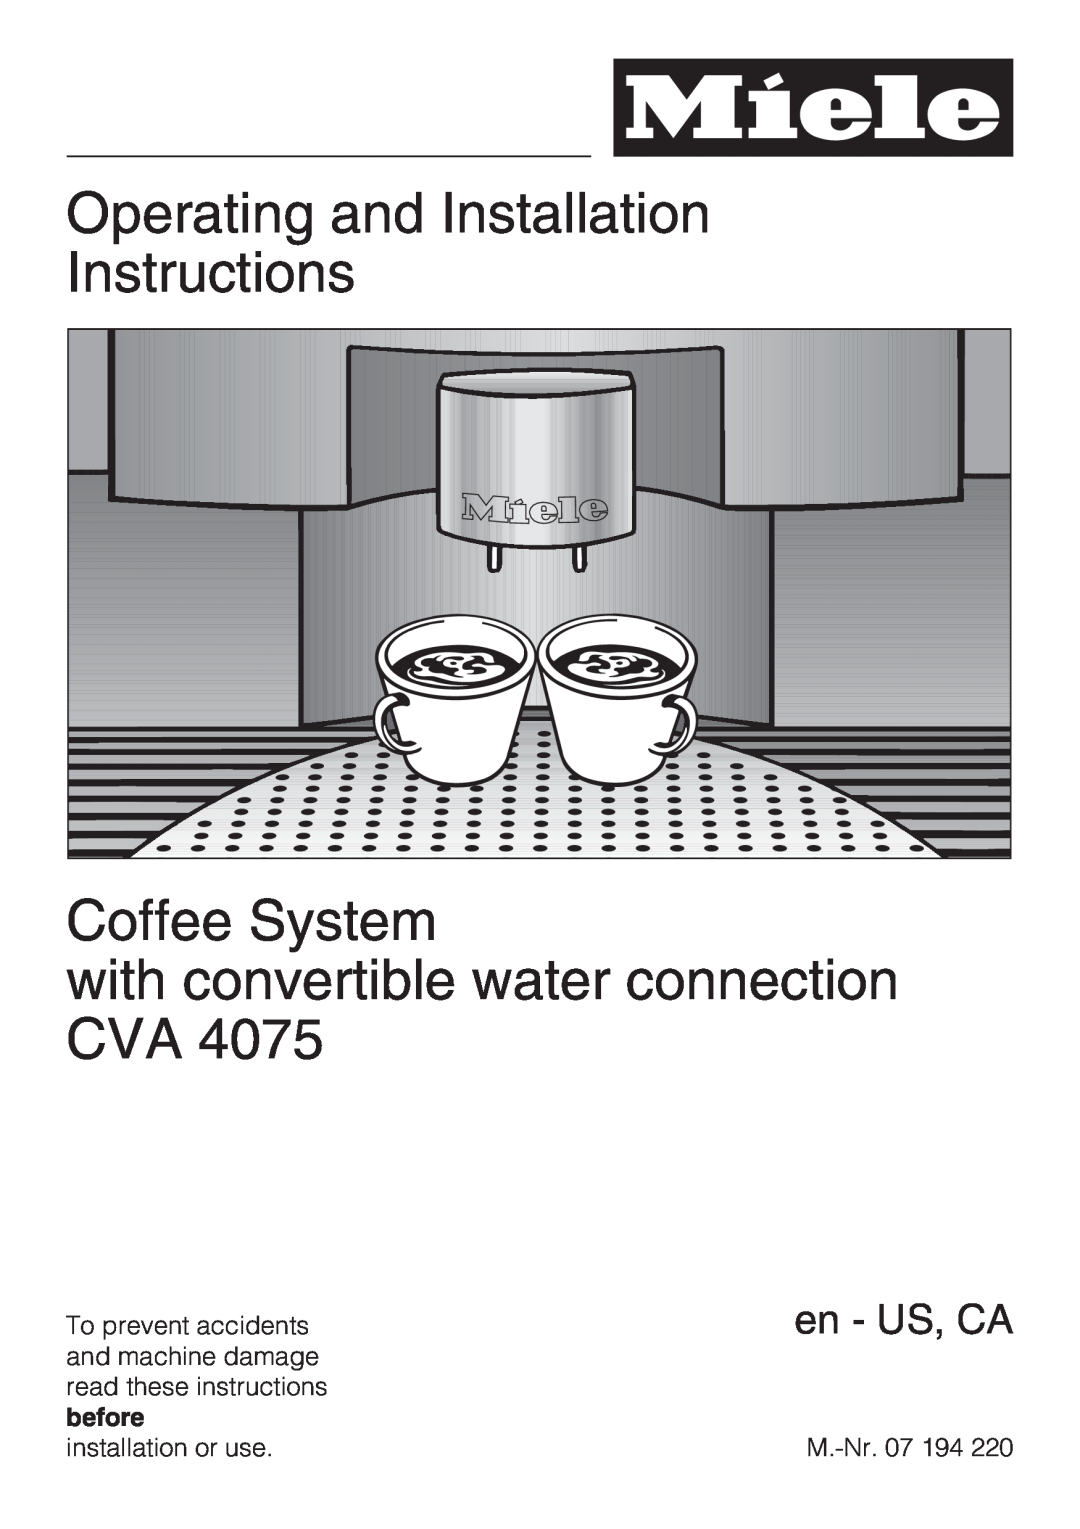 Miele CVA4075 installation instructions Operating and Installation Instructions, Coffee System, before, en - US, CA 